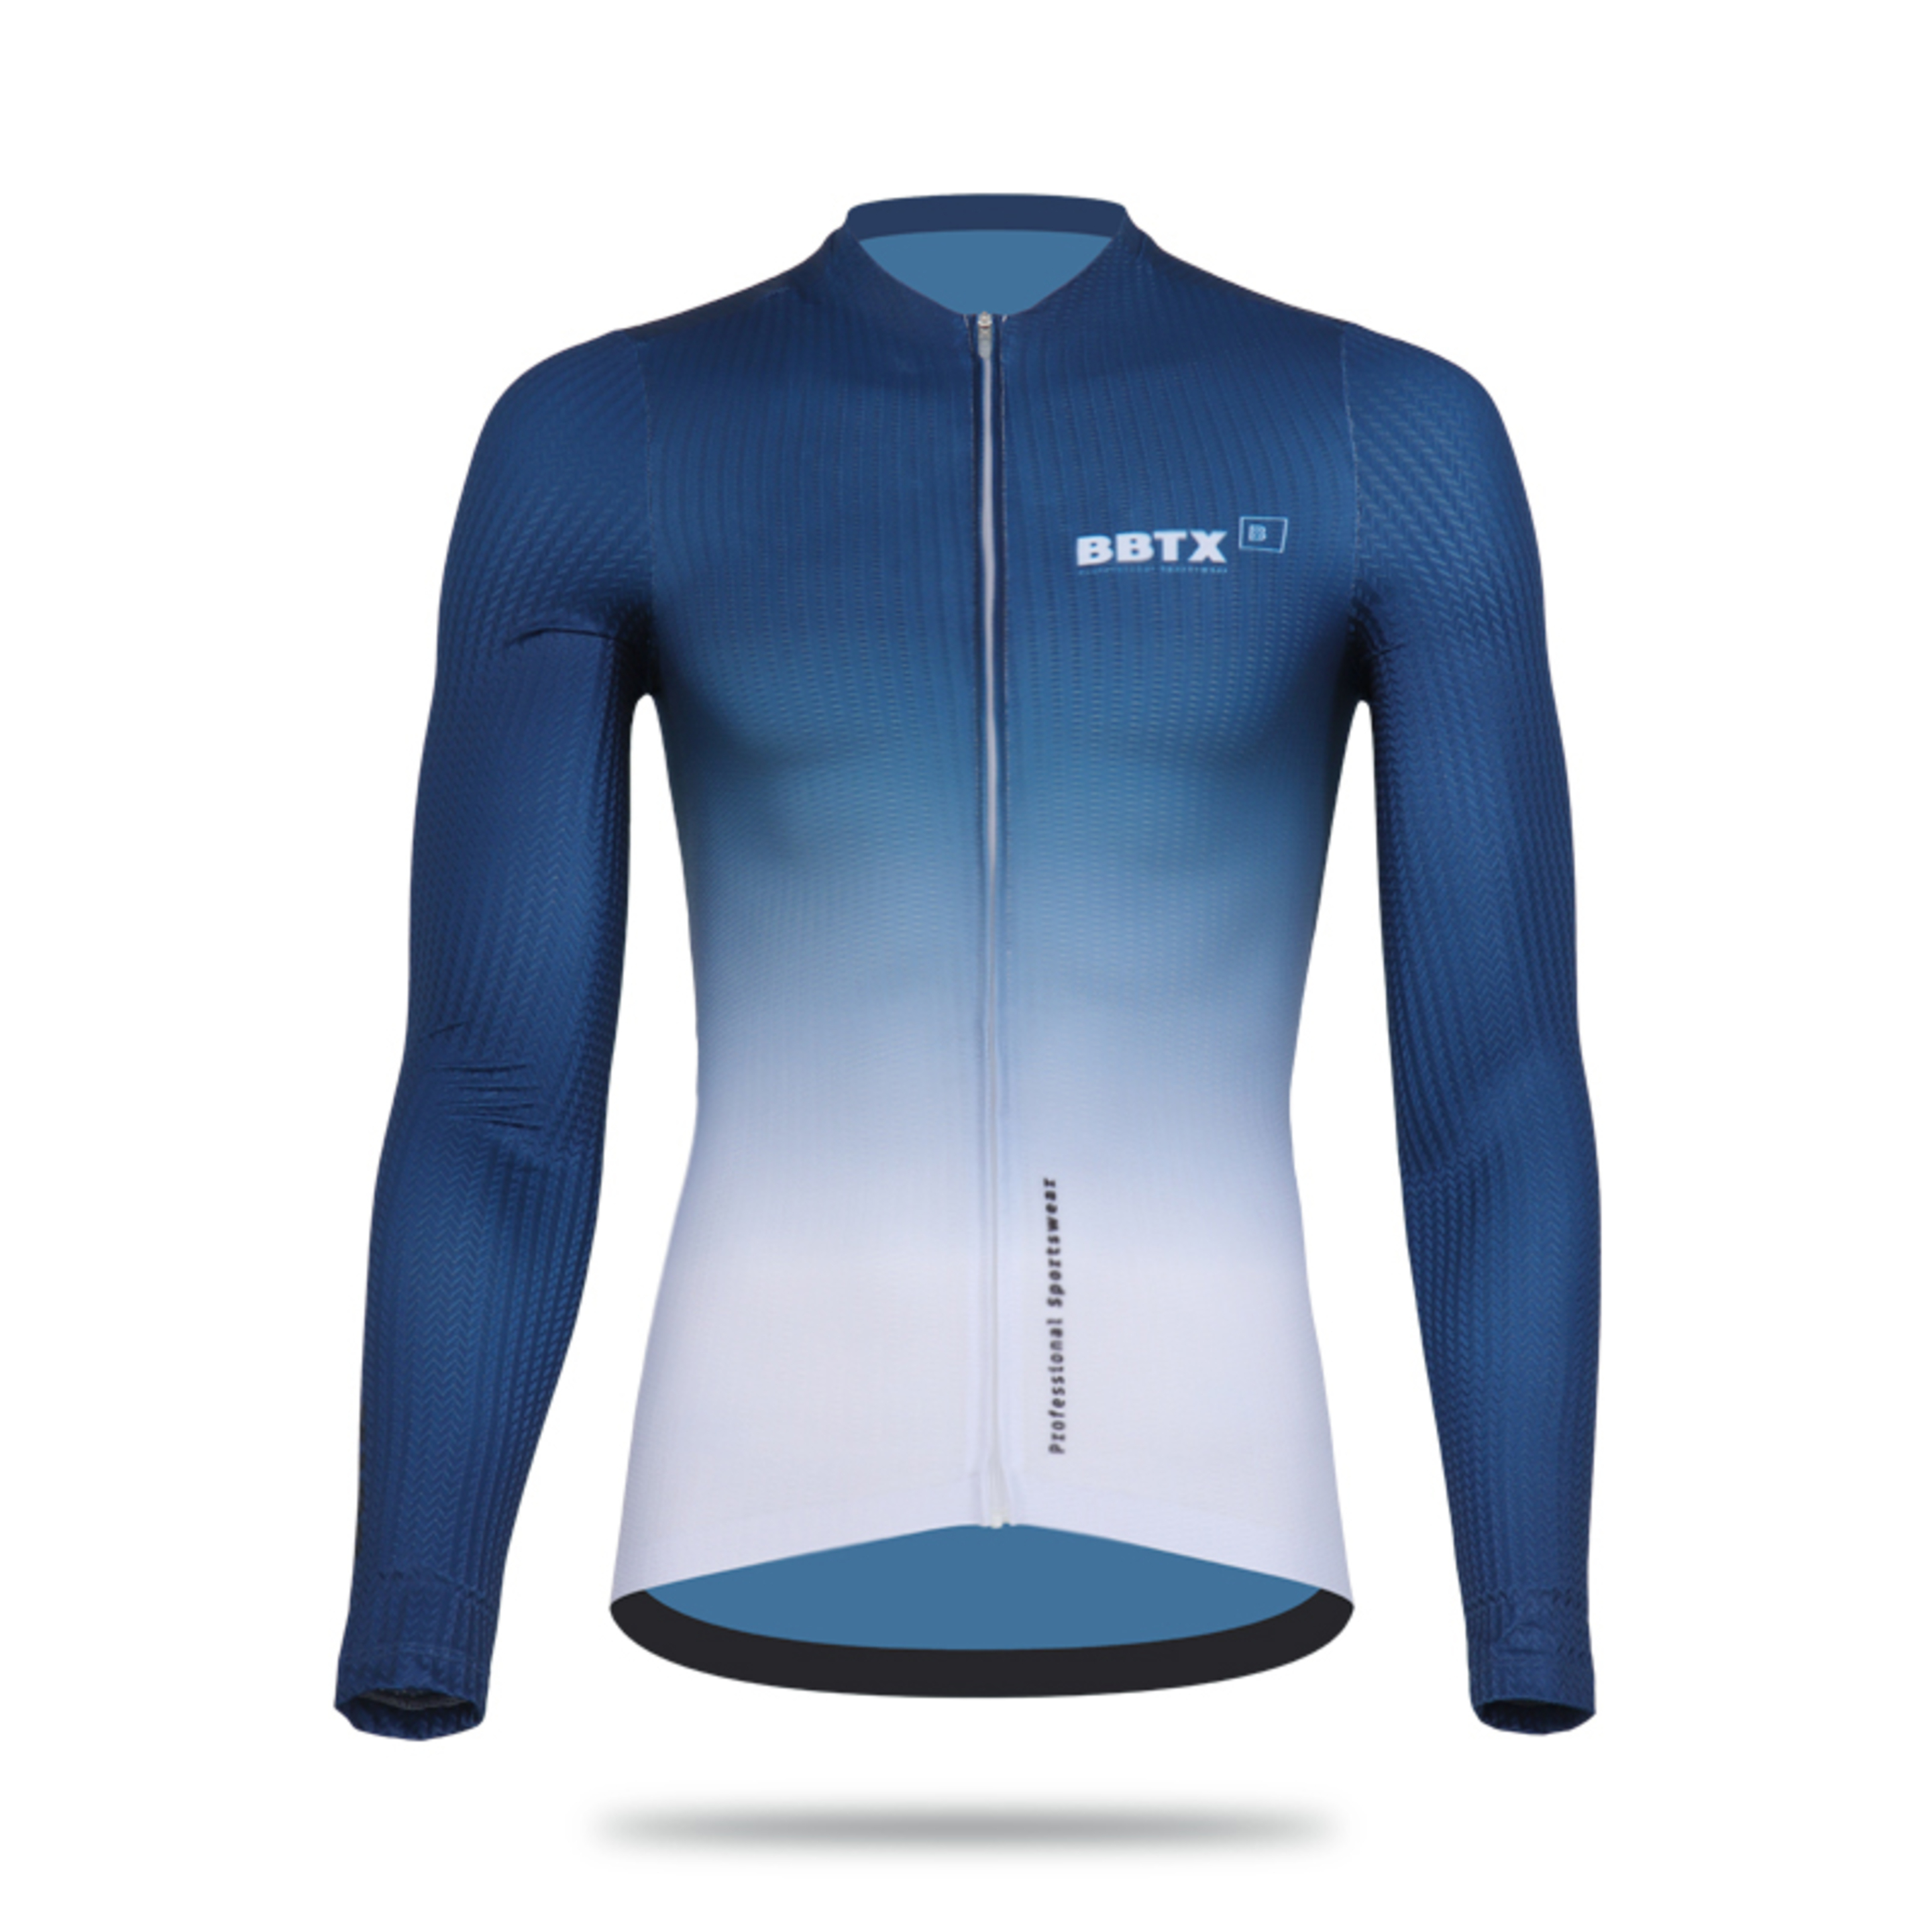 Bbtx Lx 1000 - Azul - Casaco Ciclismo | Sport Zone MKP